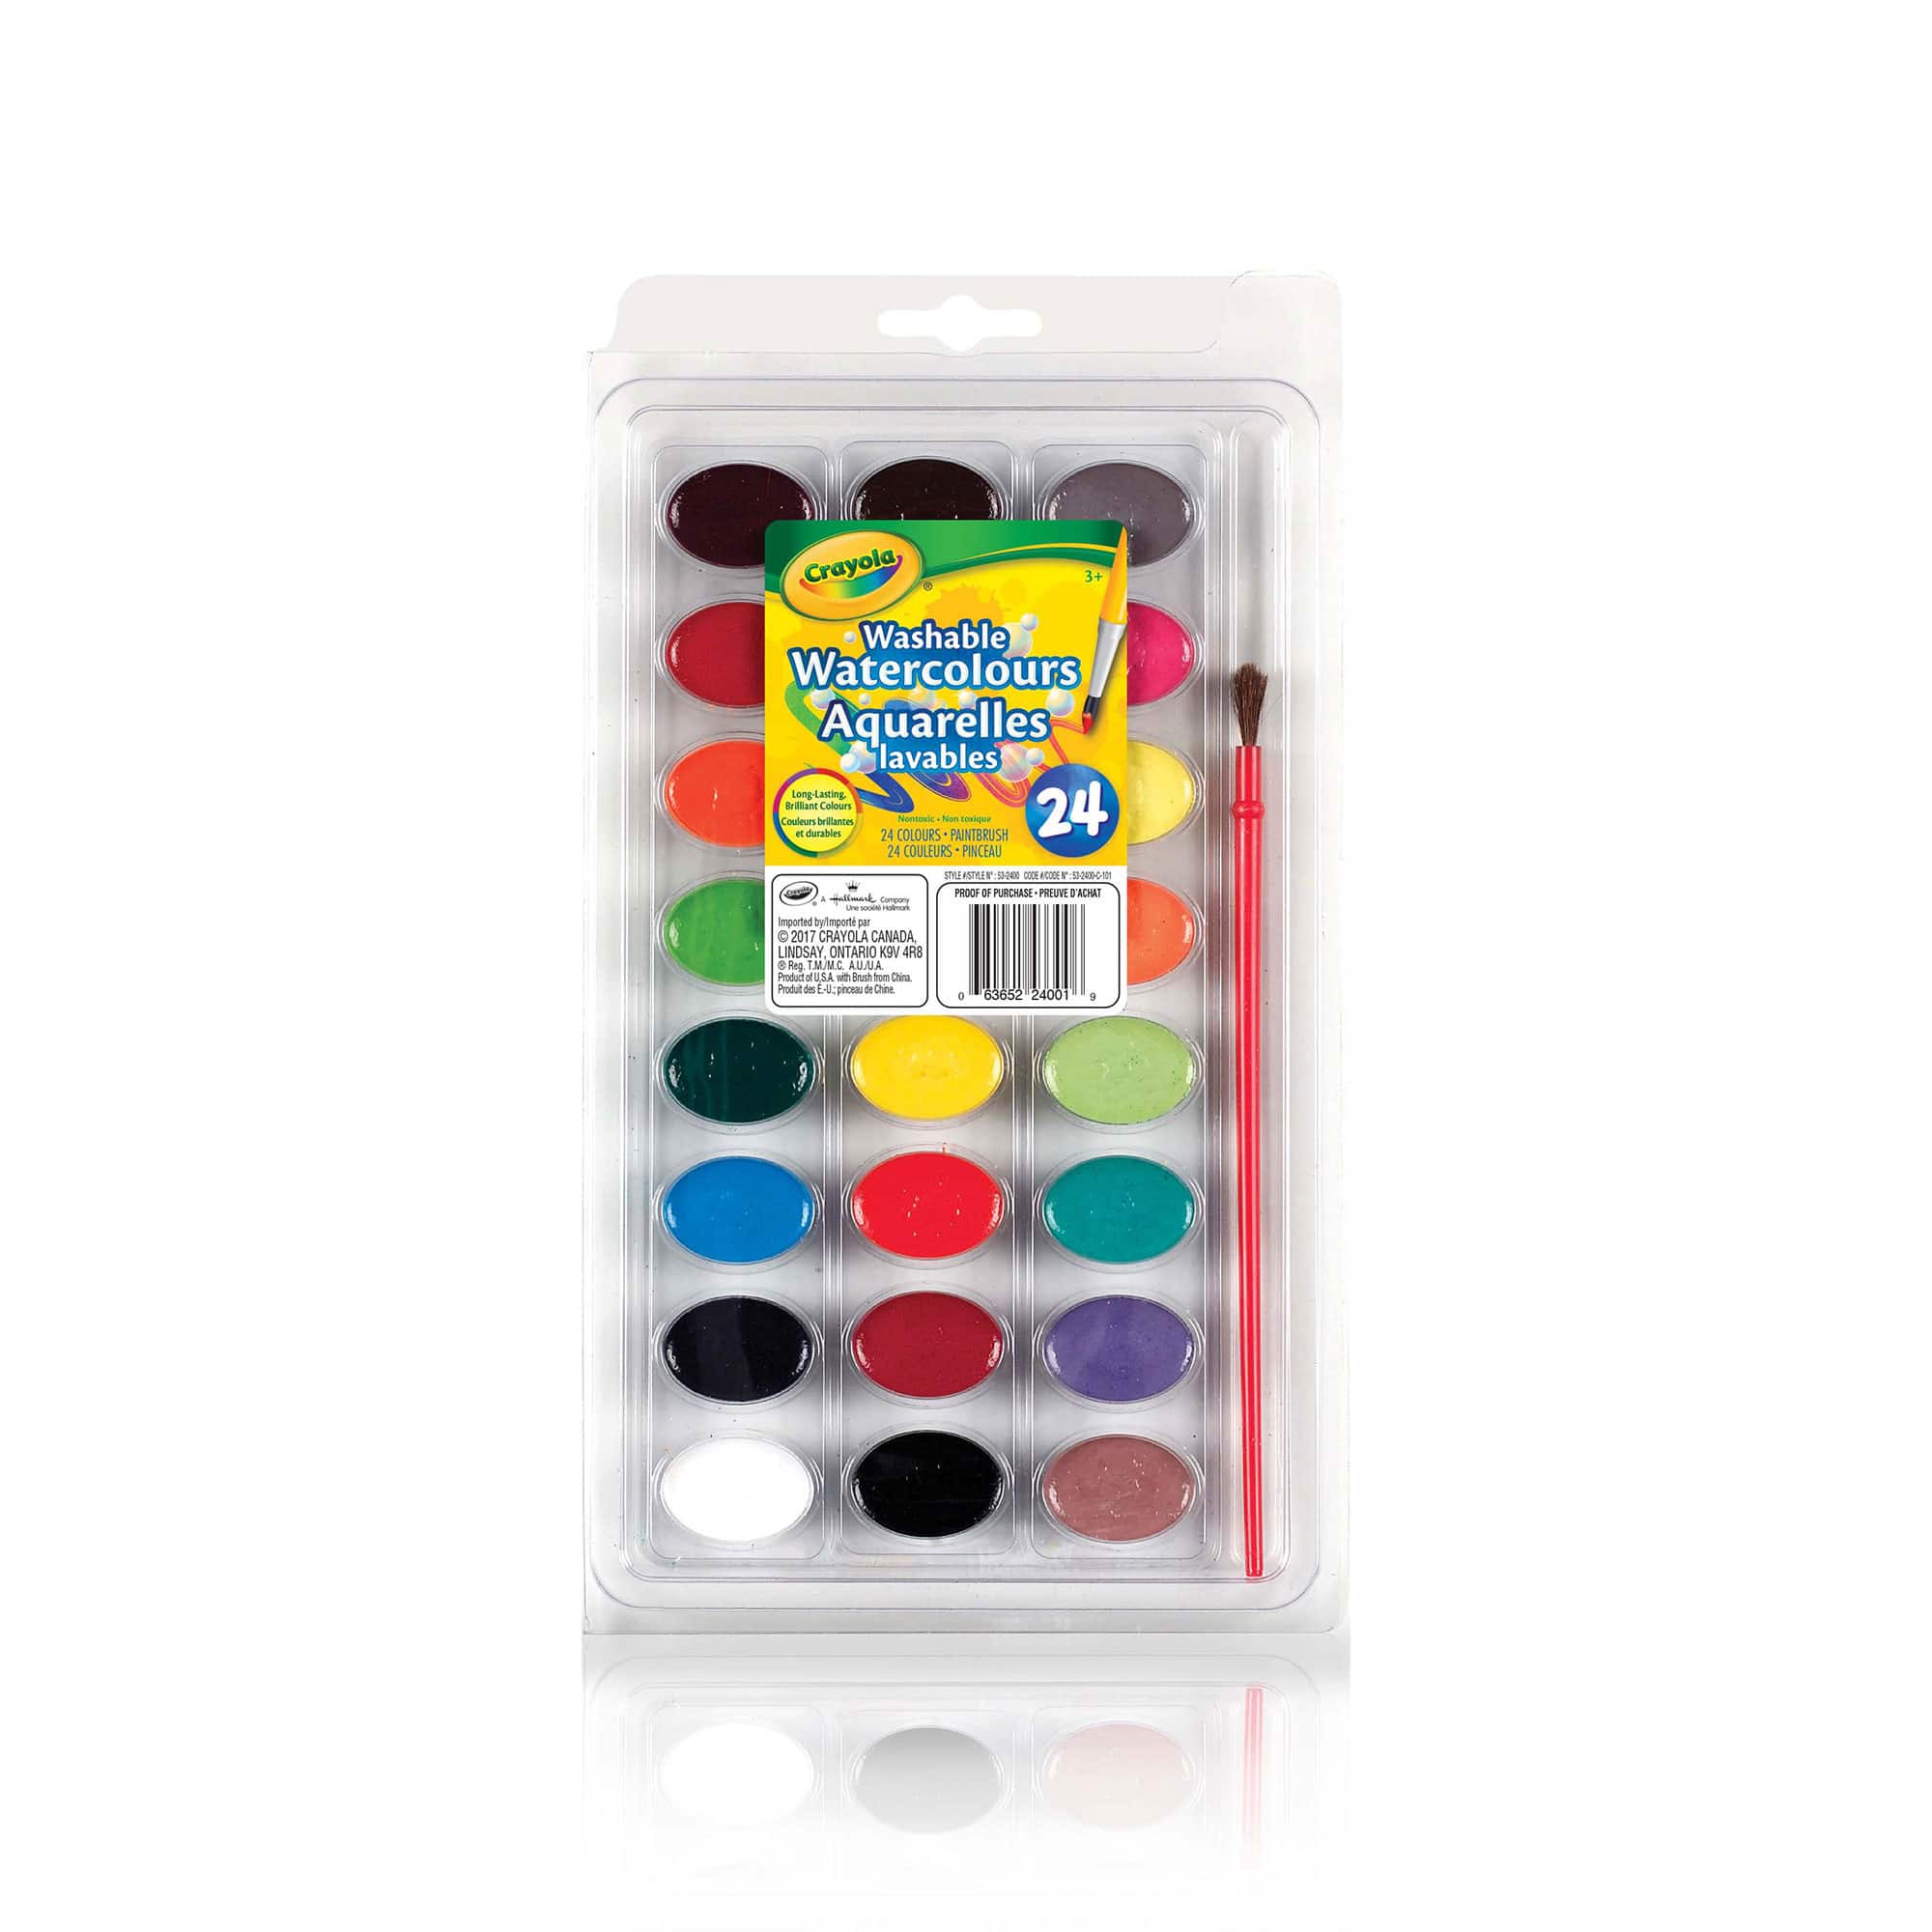 crayola paint sets